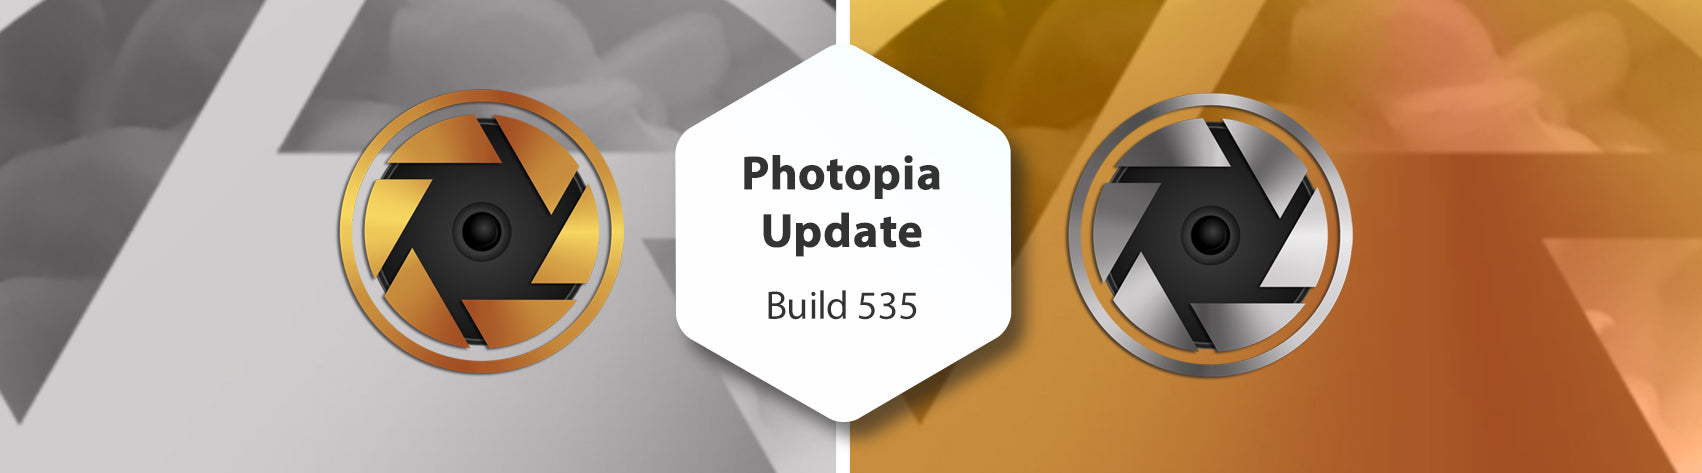 Photopia Update - Build 535